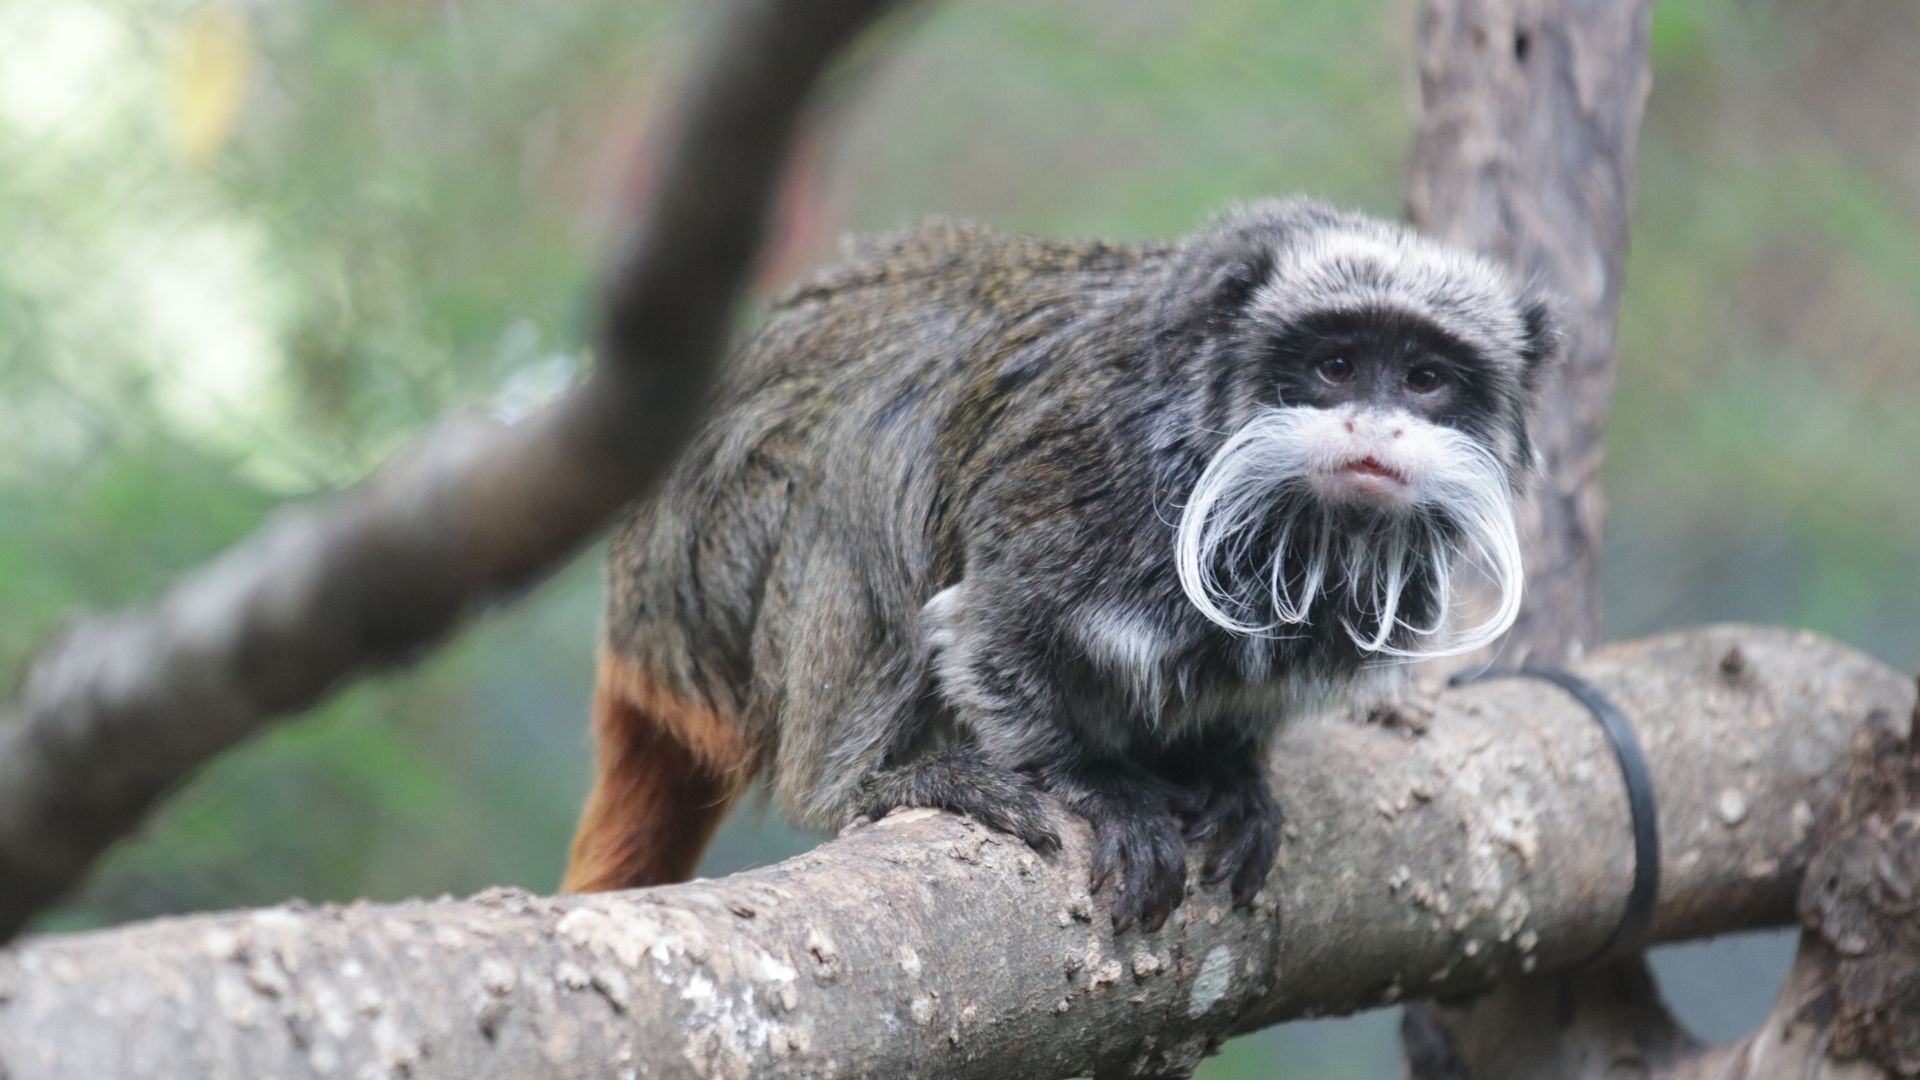 An emperor tamarin monkey, looking adorable